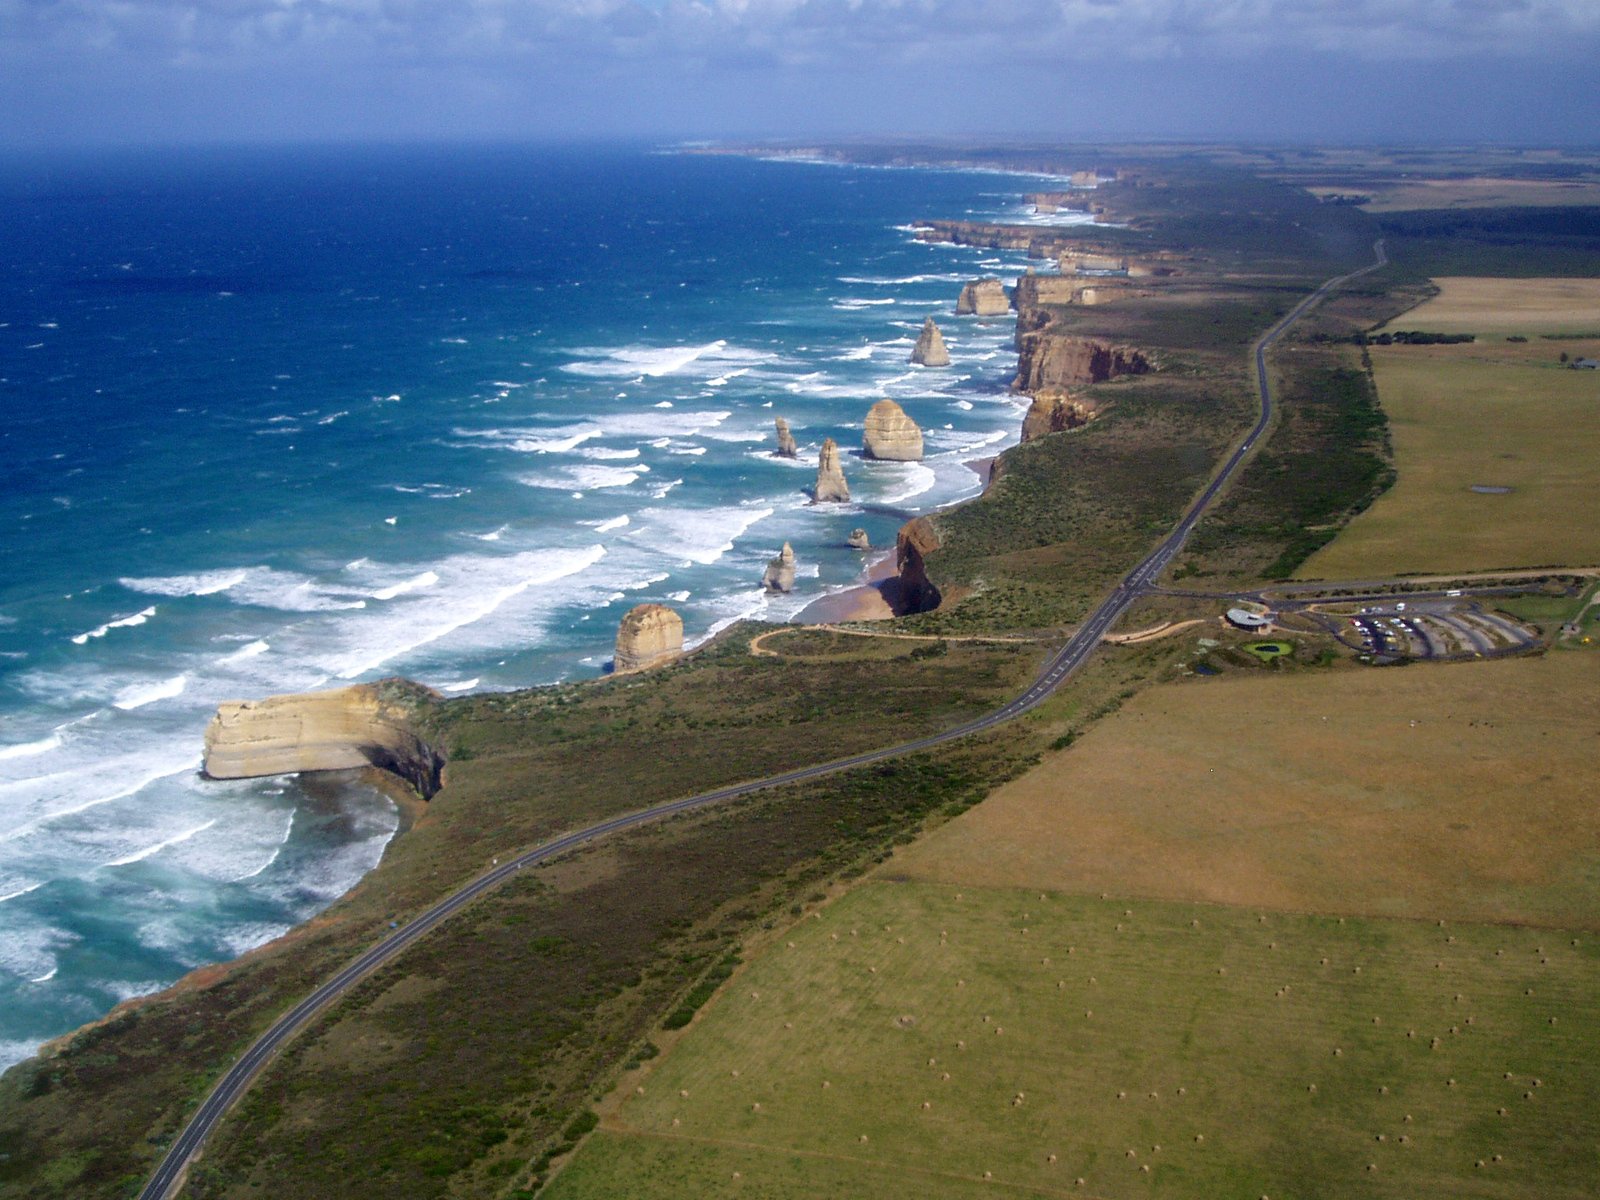 the coastline road is an aerial view near a town